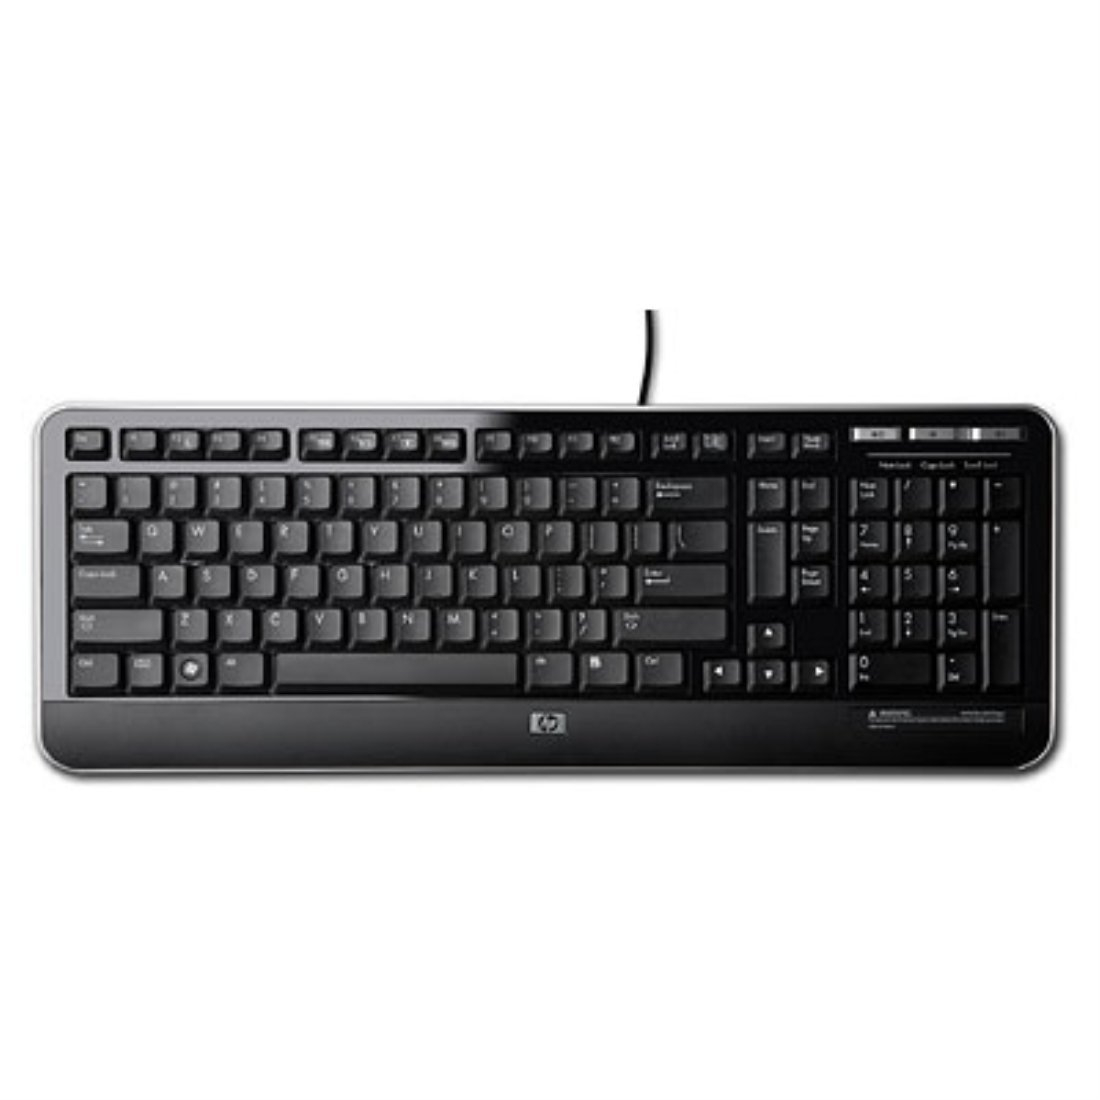 HP USB Keyboard Romania - Romanian localization